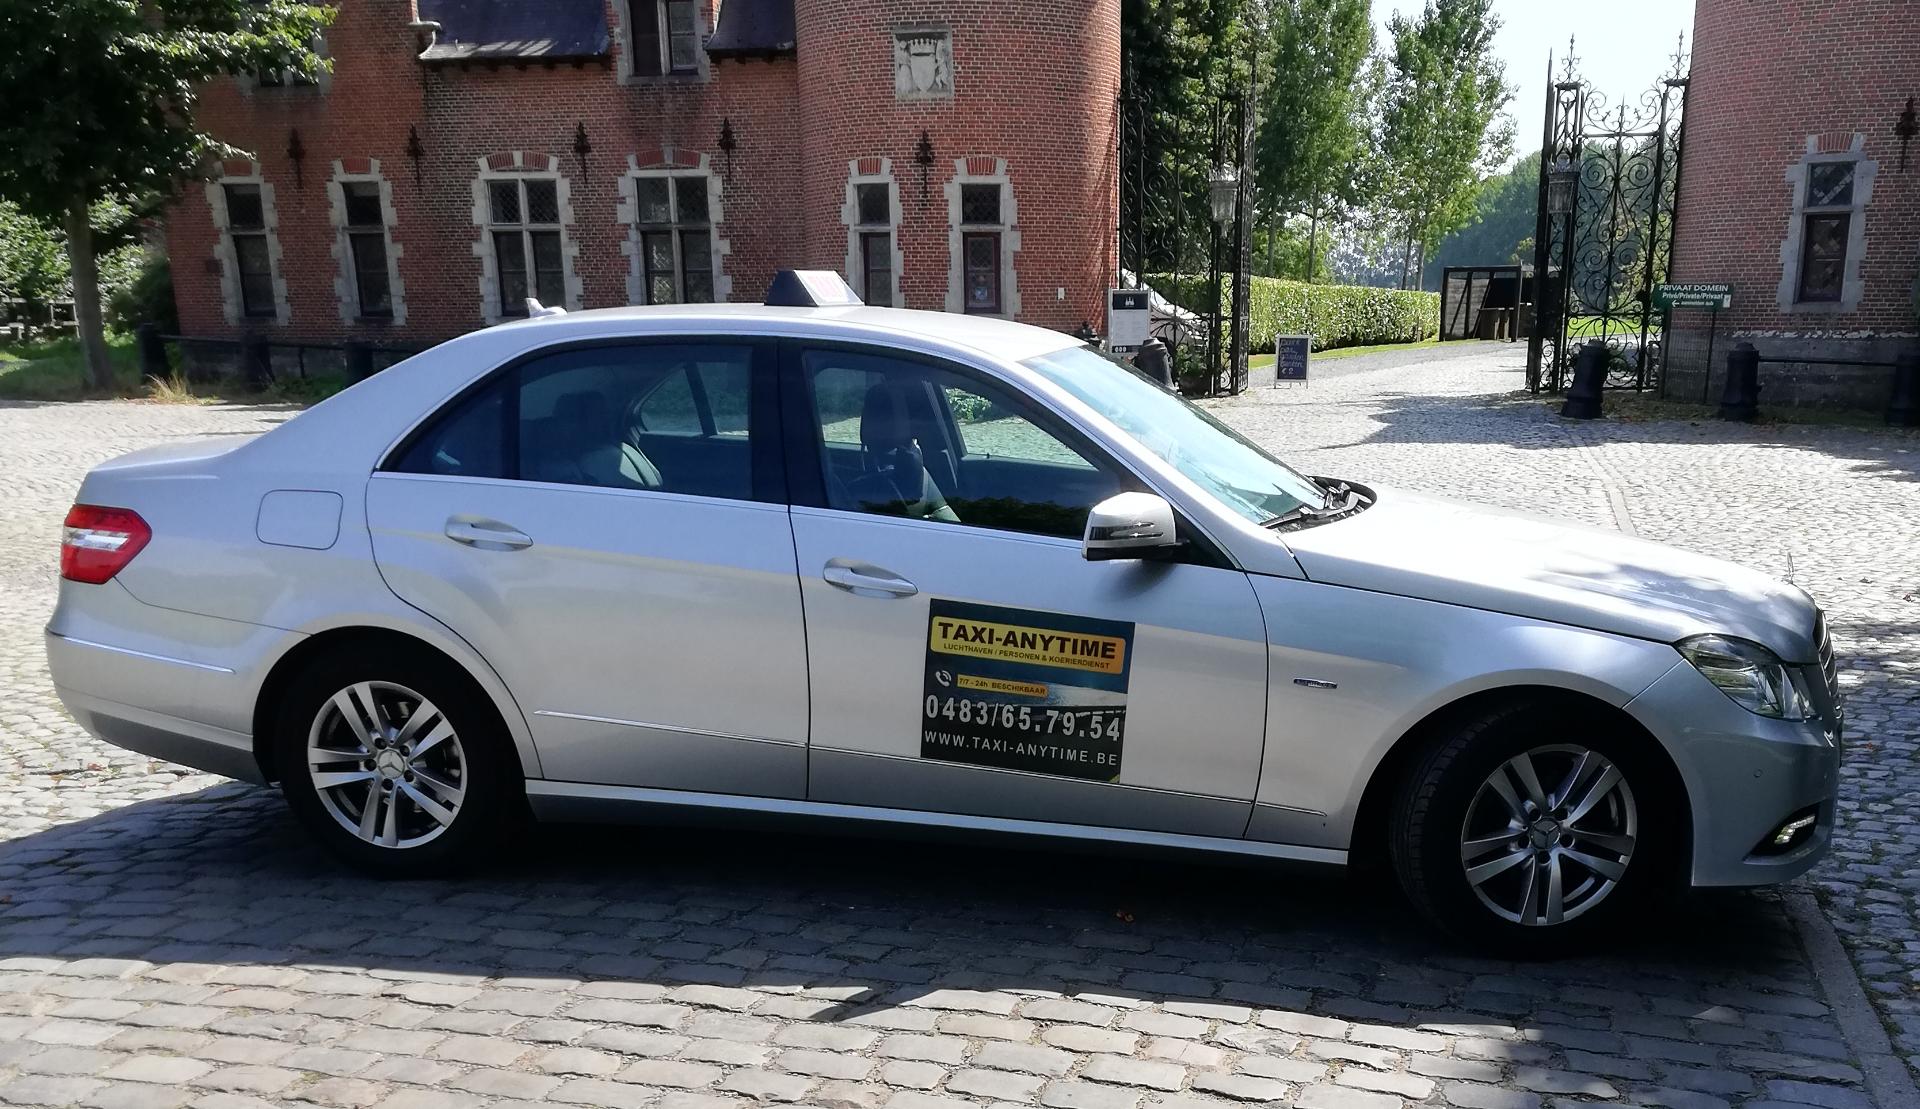 taxibedrijven Sint-Kruis Taxi Anytime